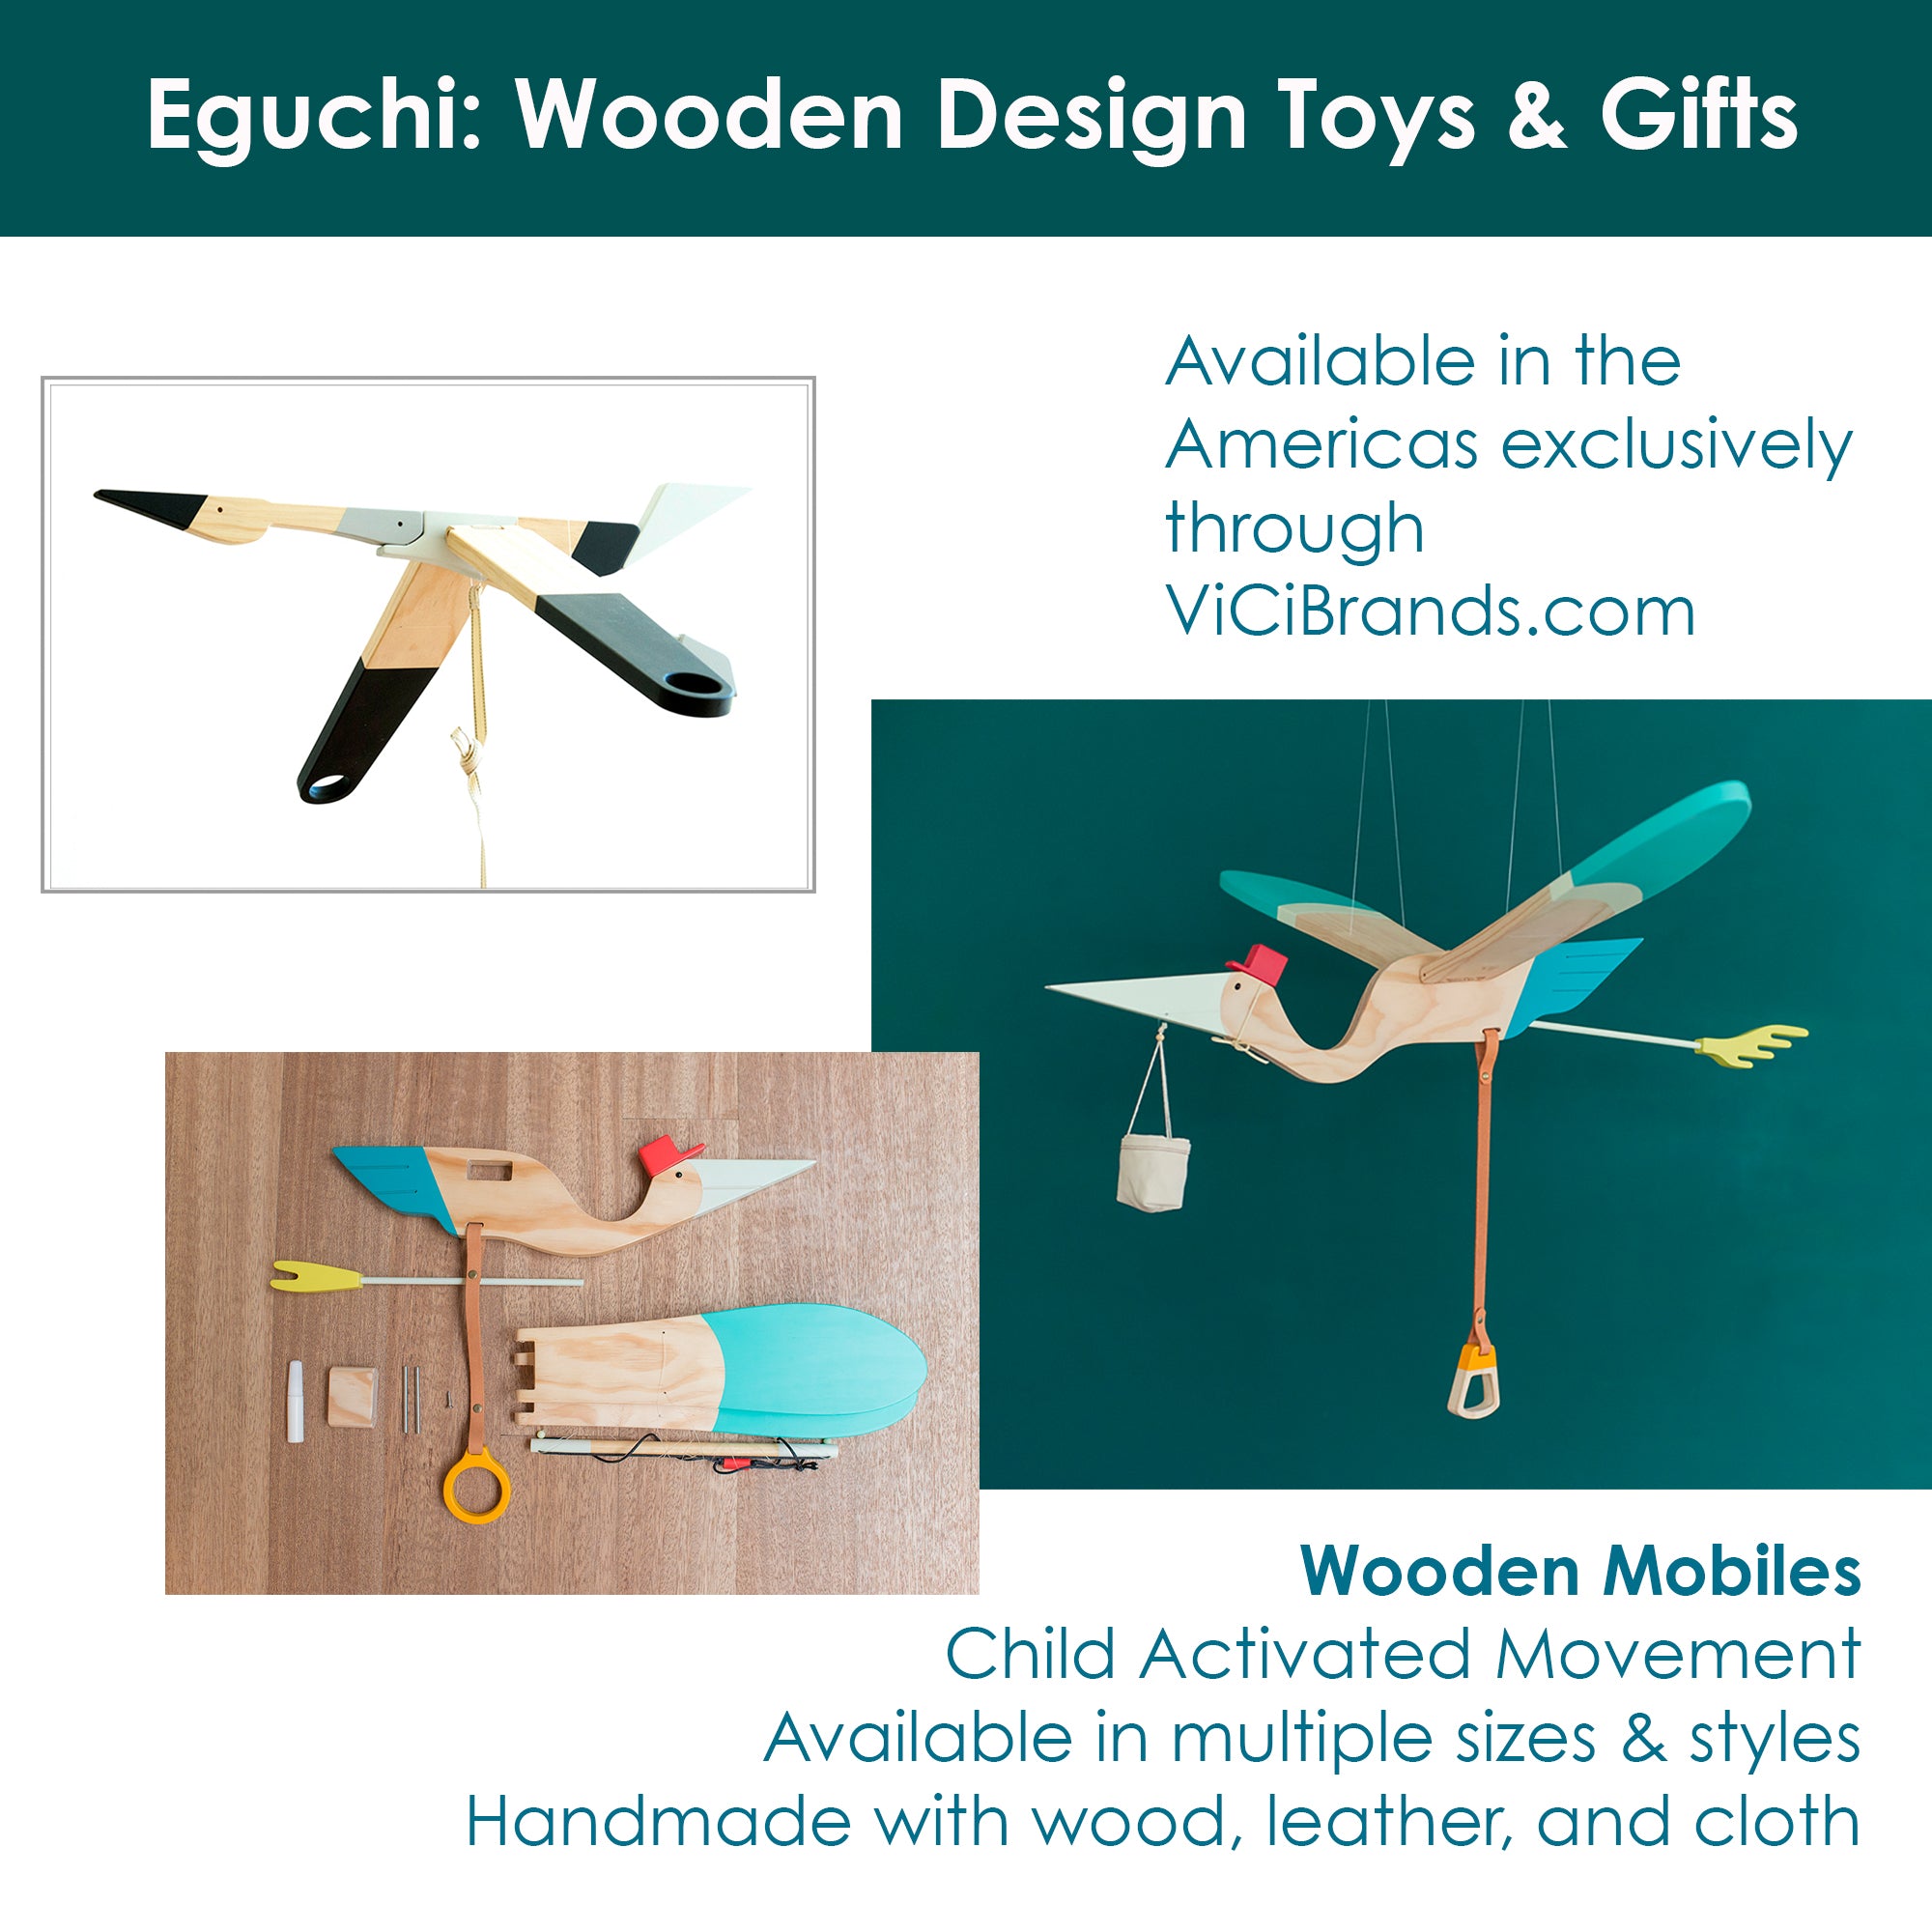 EGUCHI: Wooden Design Toys & Gifts!